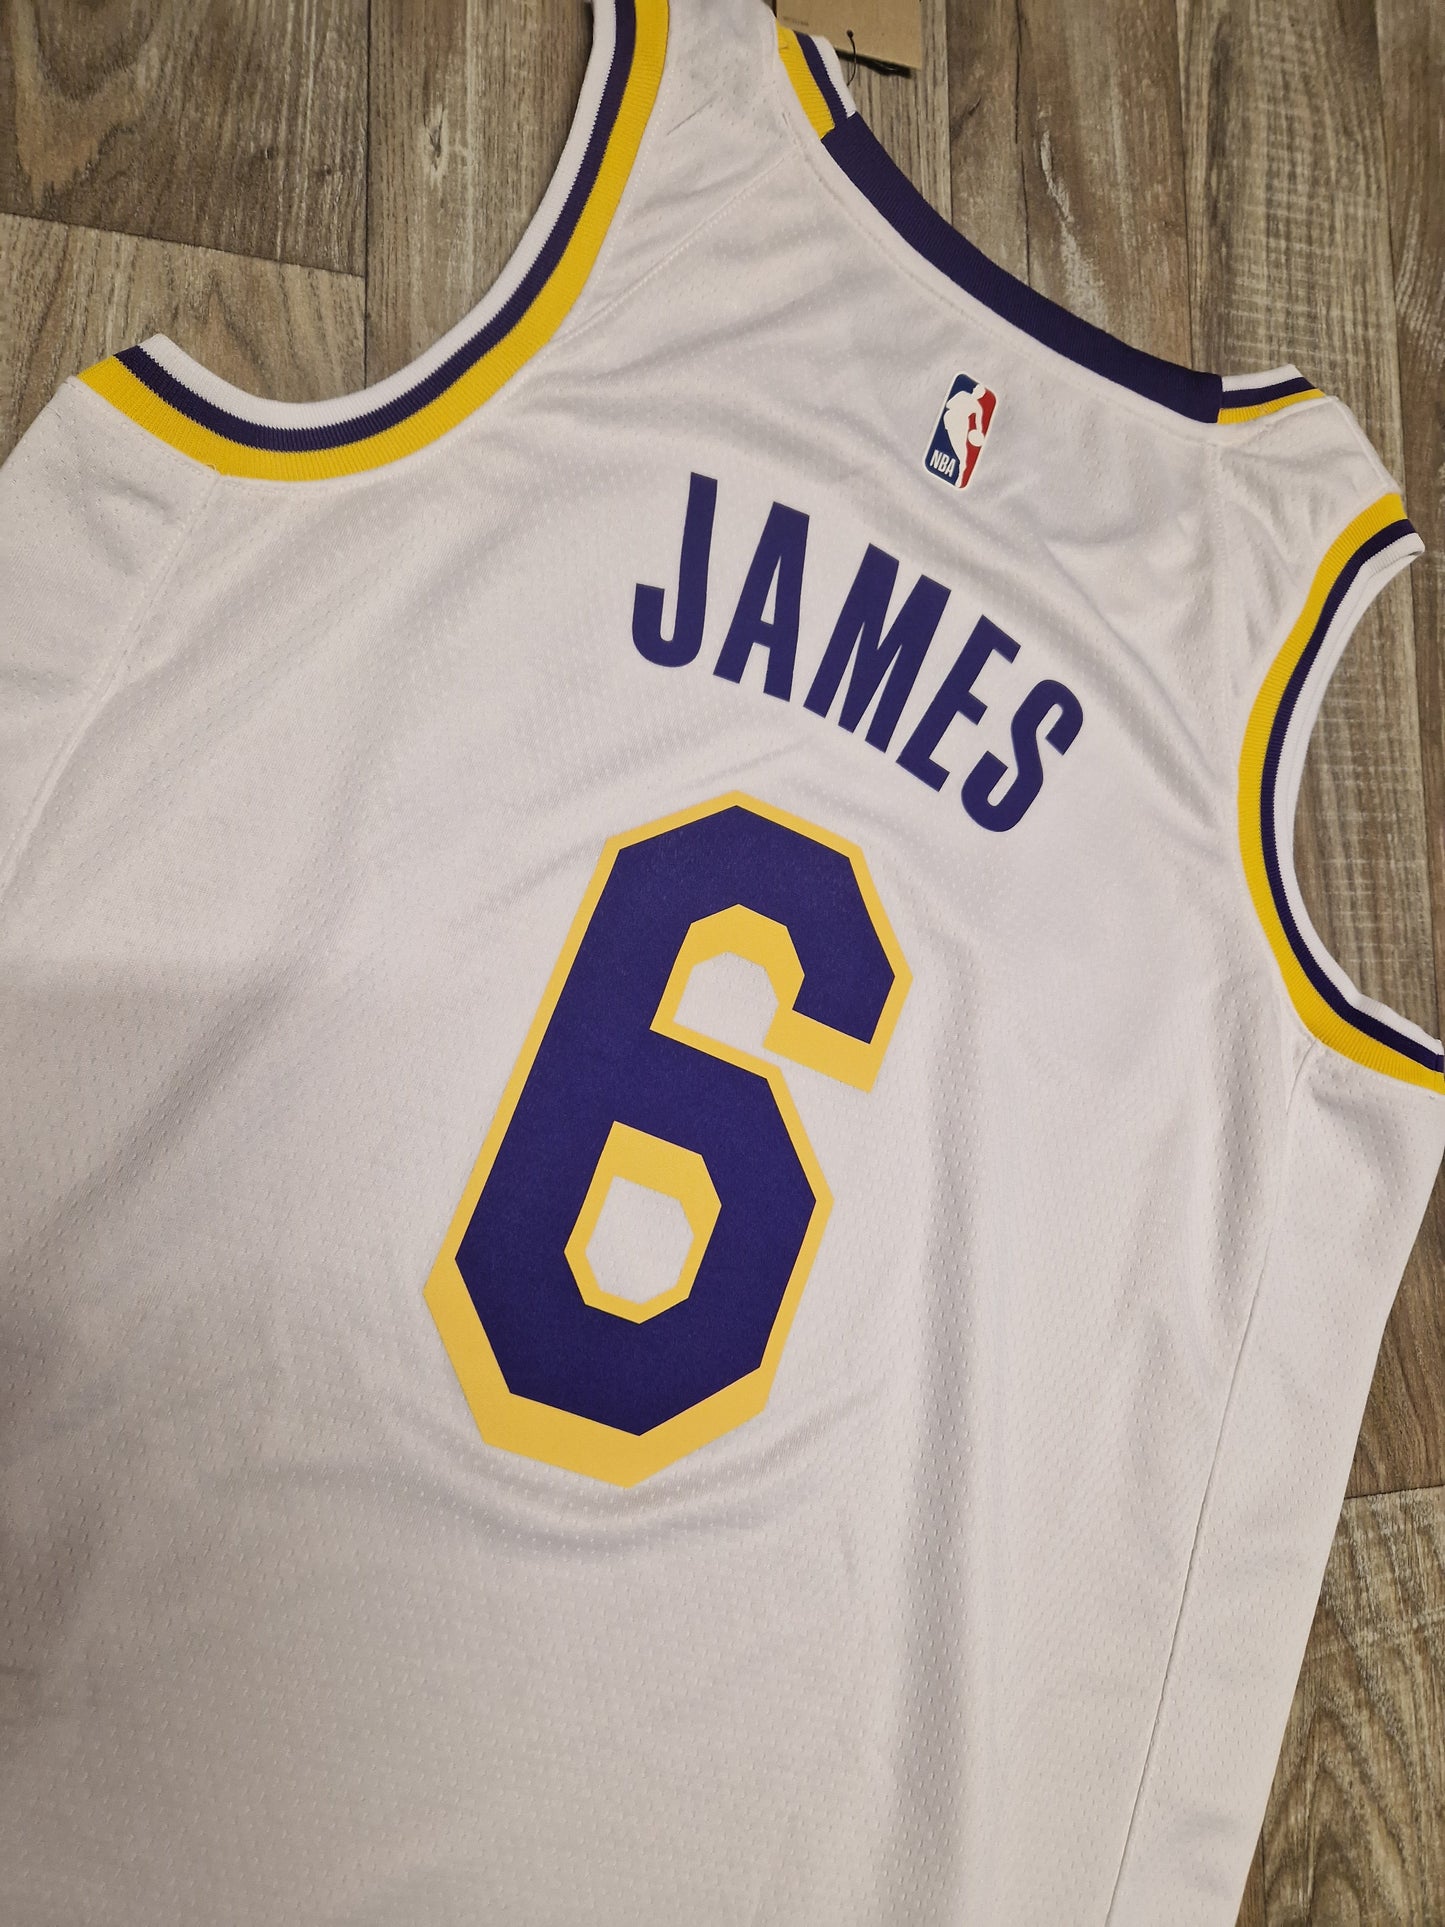 LeBron James Los Angeles Lakers Jersey Size Medium